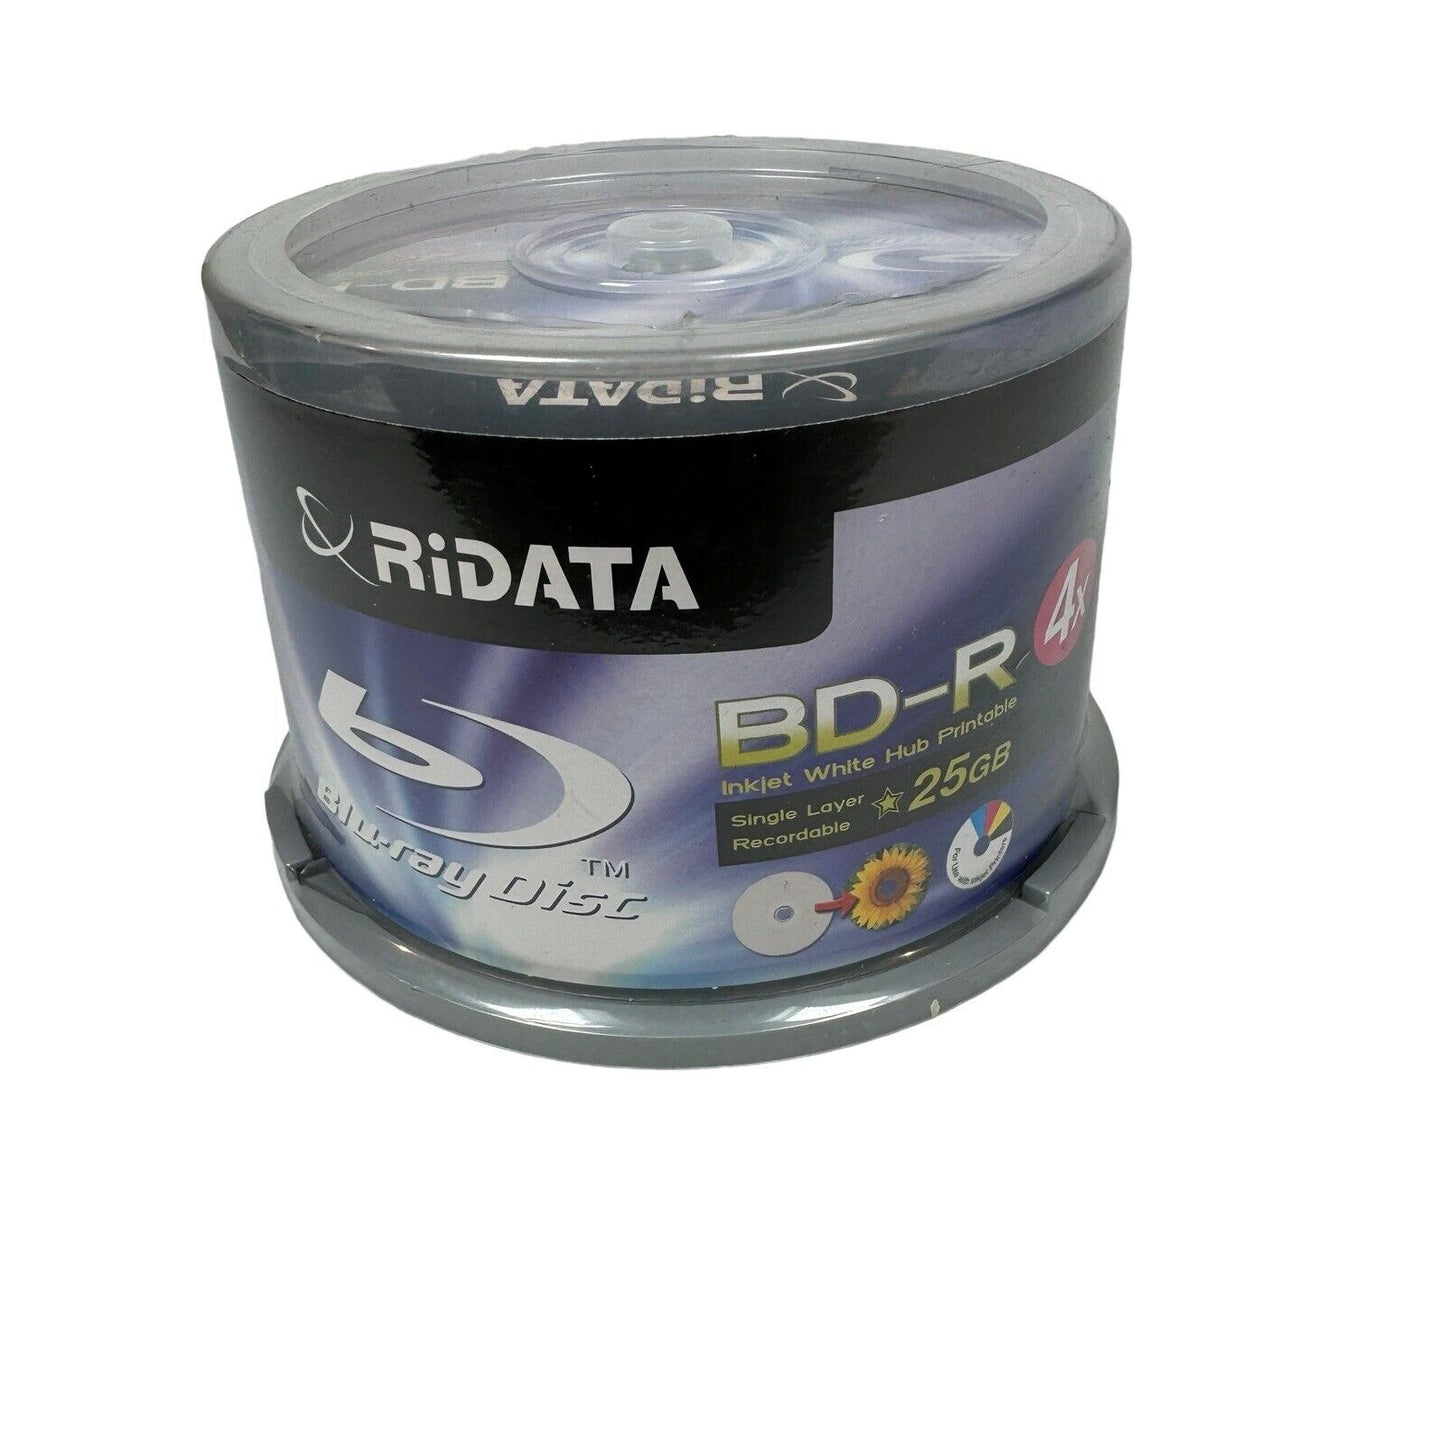 Ridata BD-R 4x 25GB Blu-ray Media White Inkjet Hub Printable Discs - Pack of 50